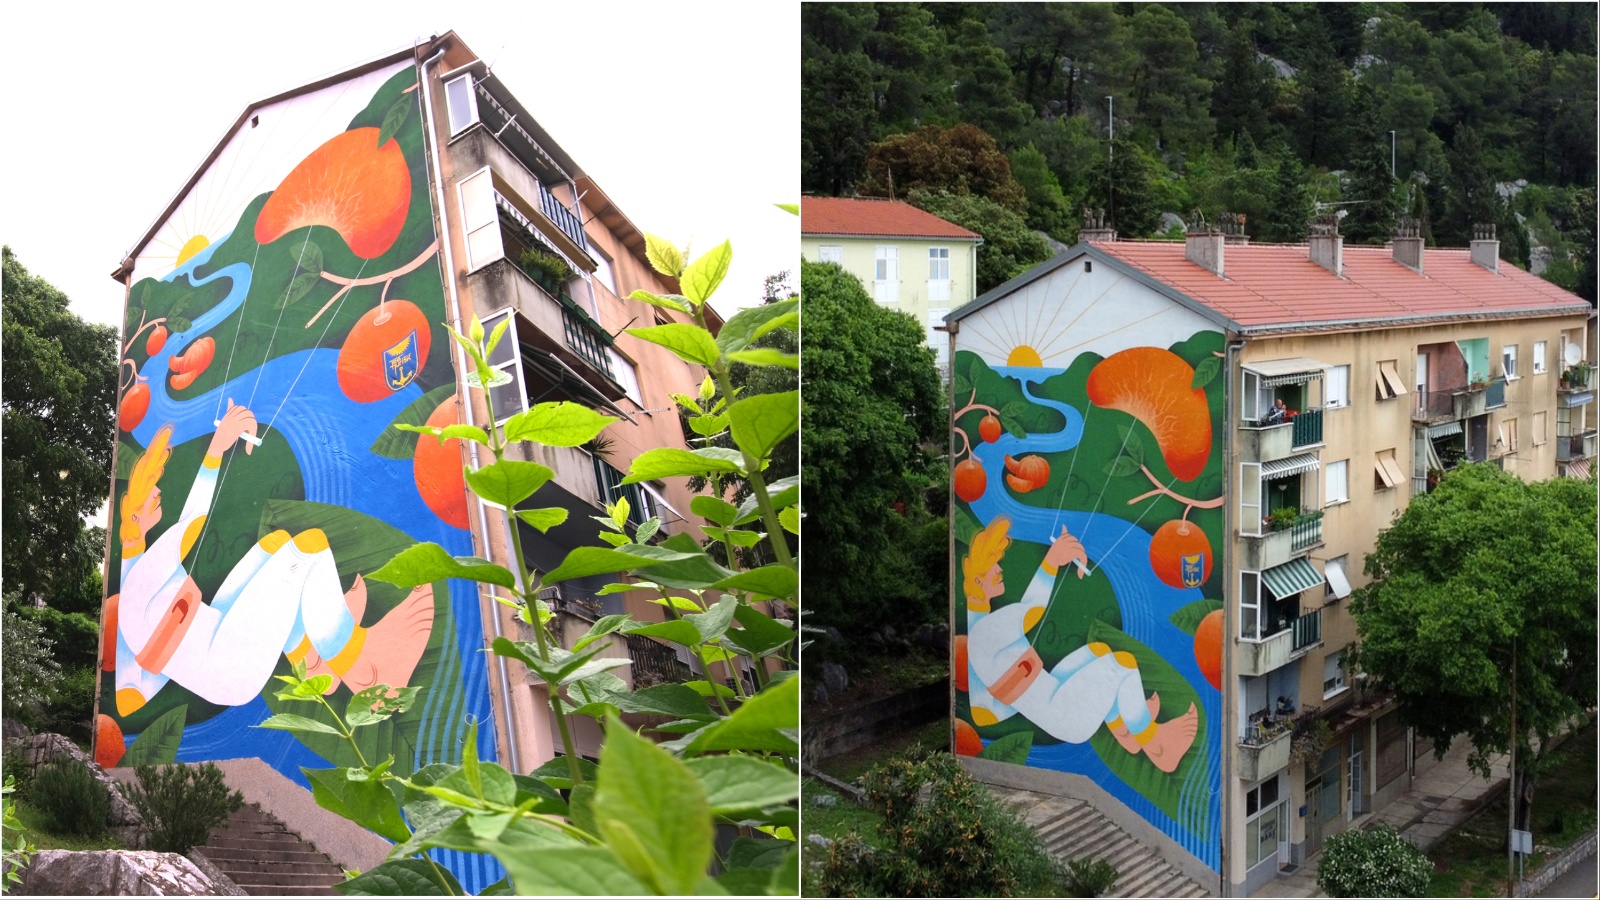 Tea Jurišić napravila je novi veliki mural koji izgleda predivno